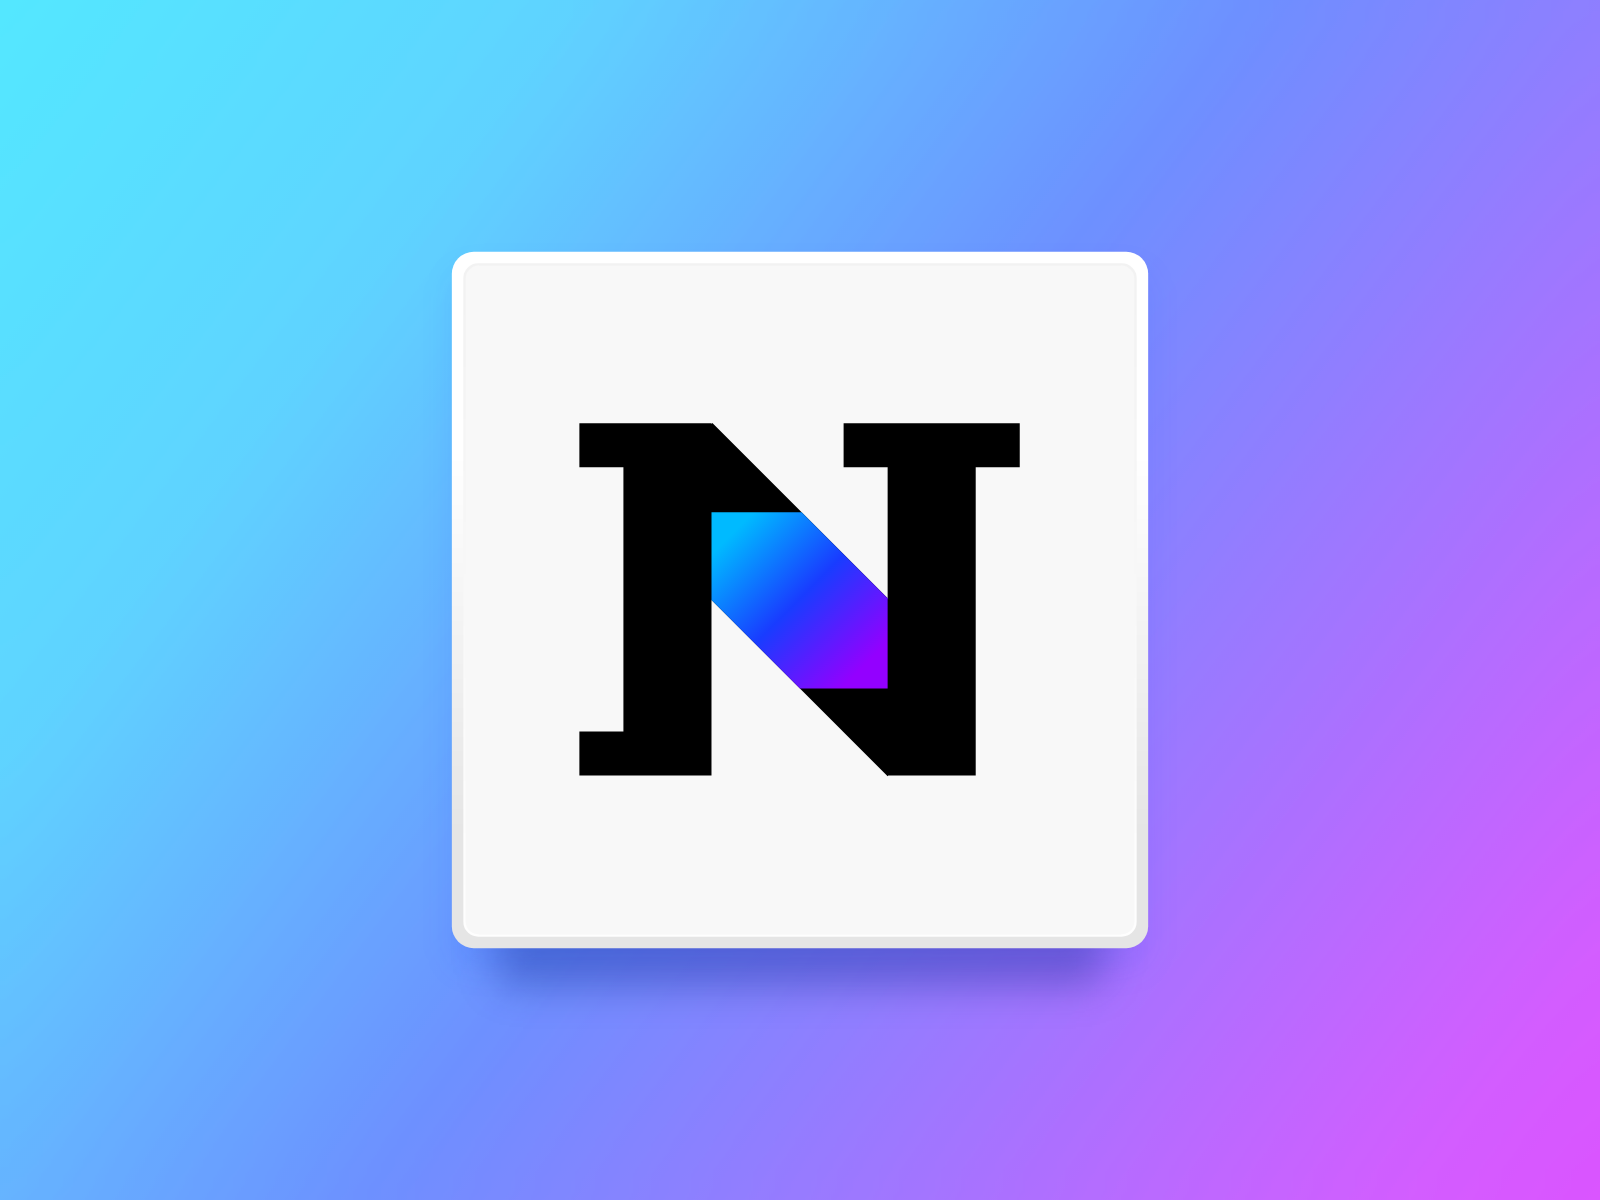 Ноушен вход. Значок notion. Notion приложение иконка. Иконки для ноушен. Логотип notion без фона.